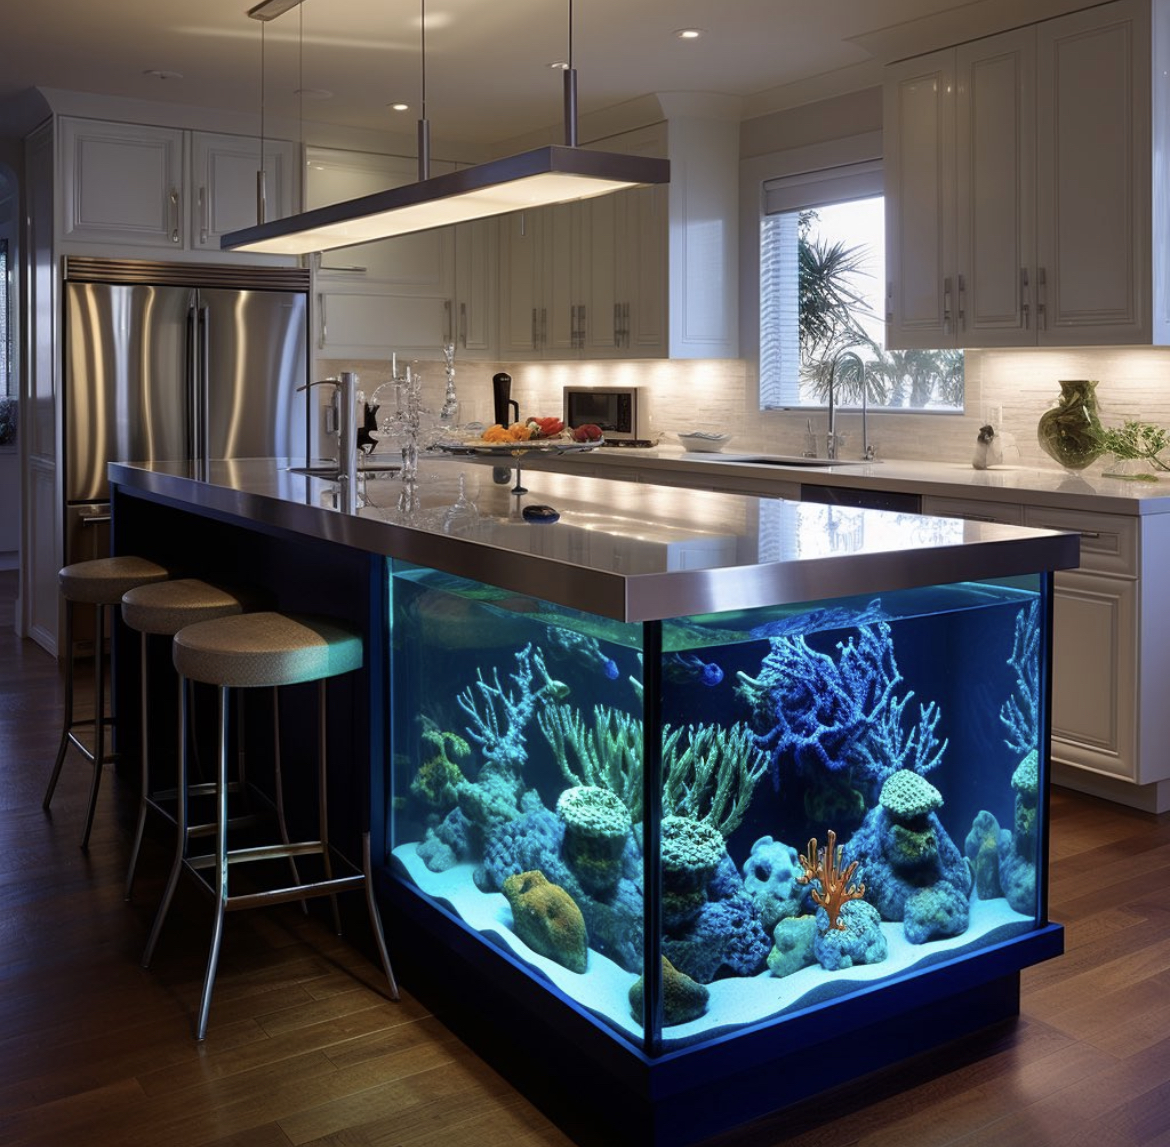 Kitchen island with an enclosed aquarium.